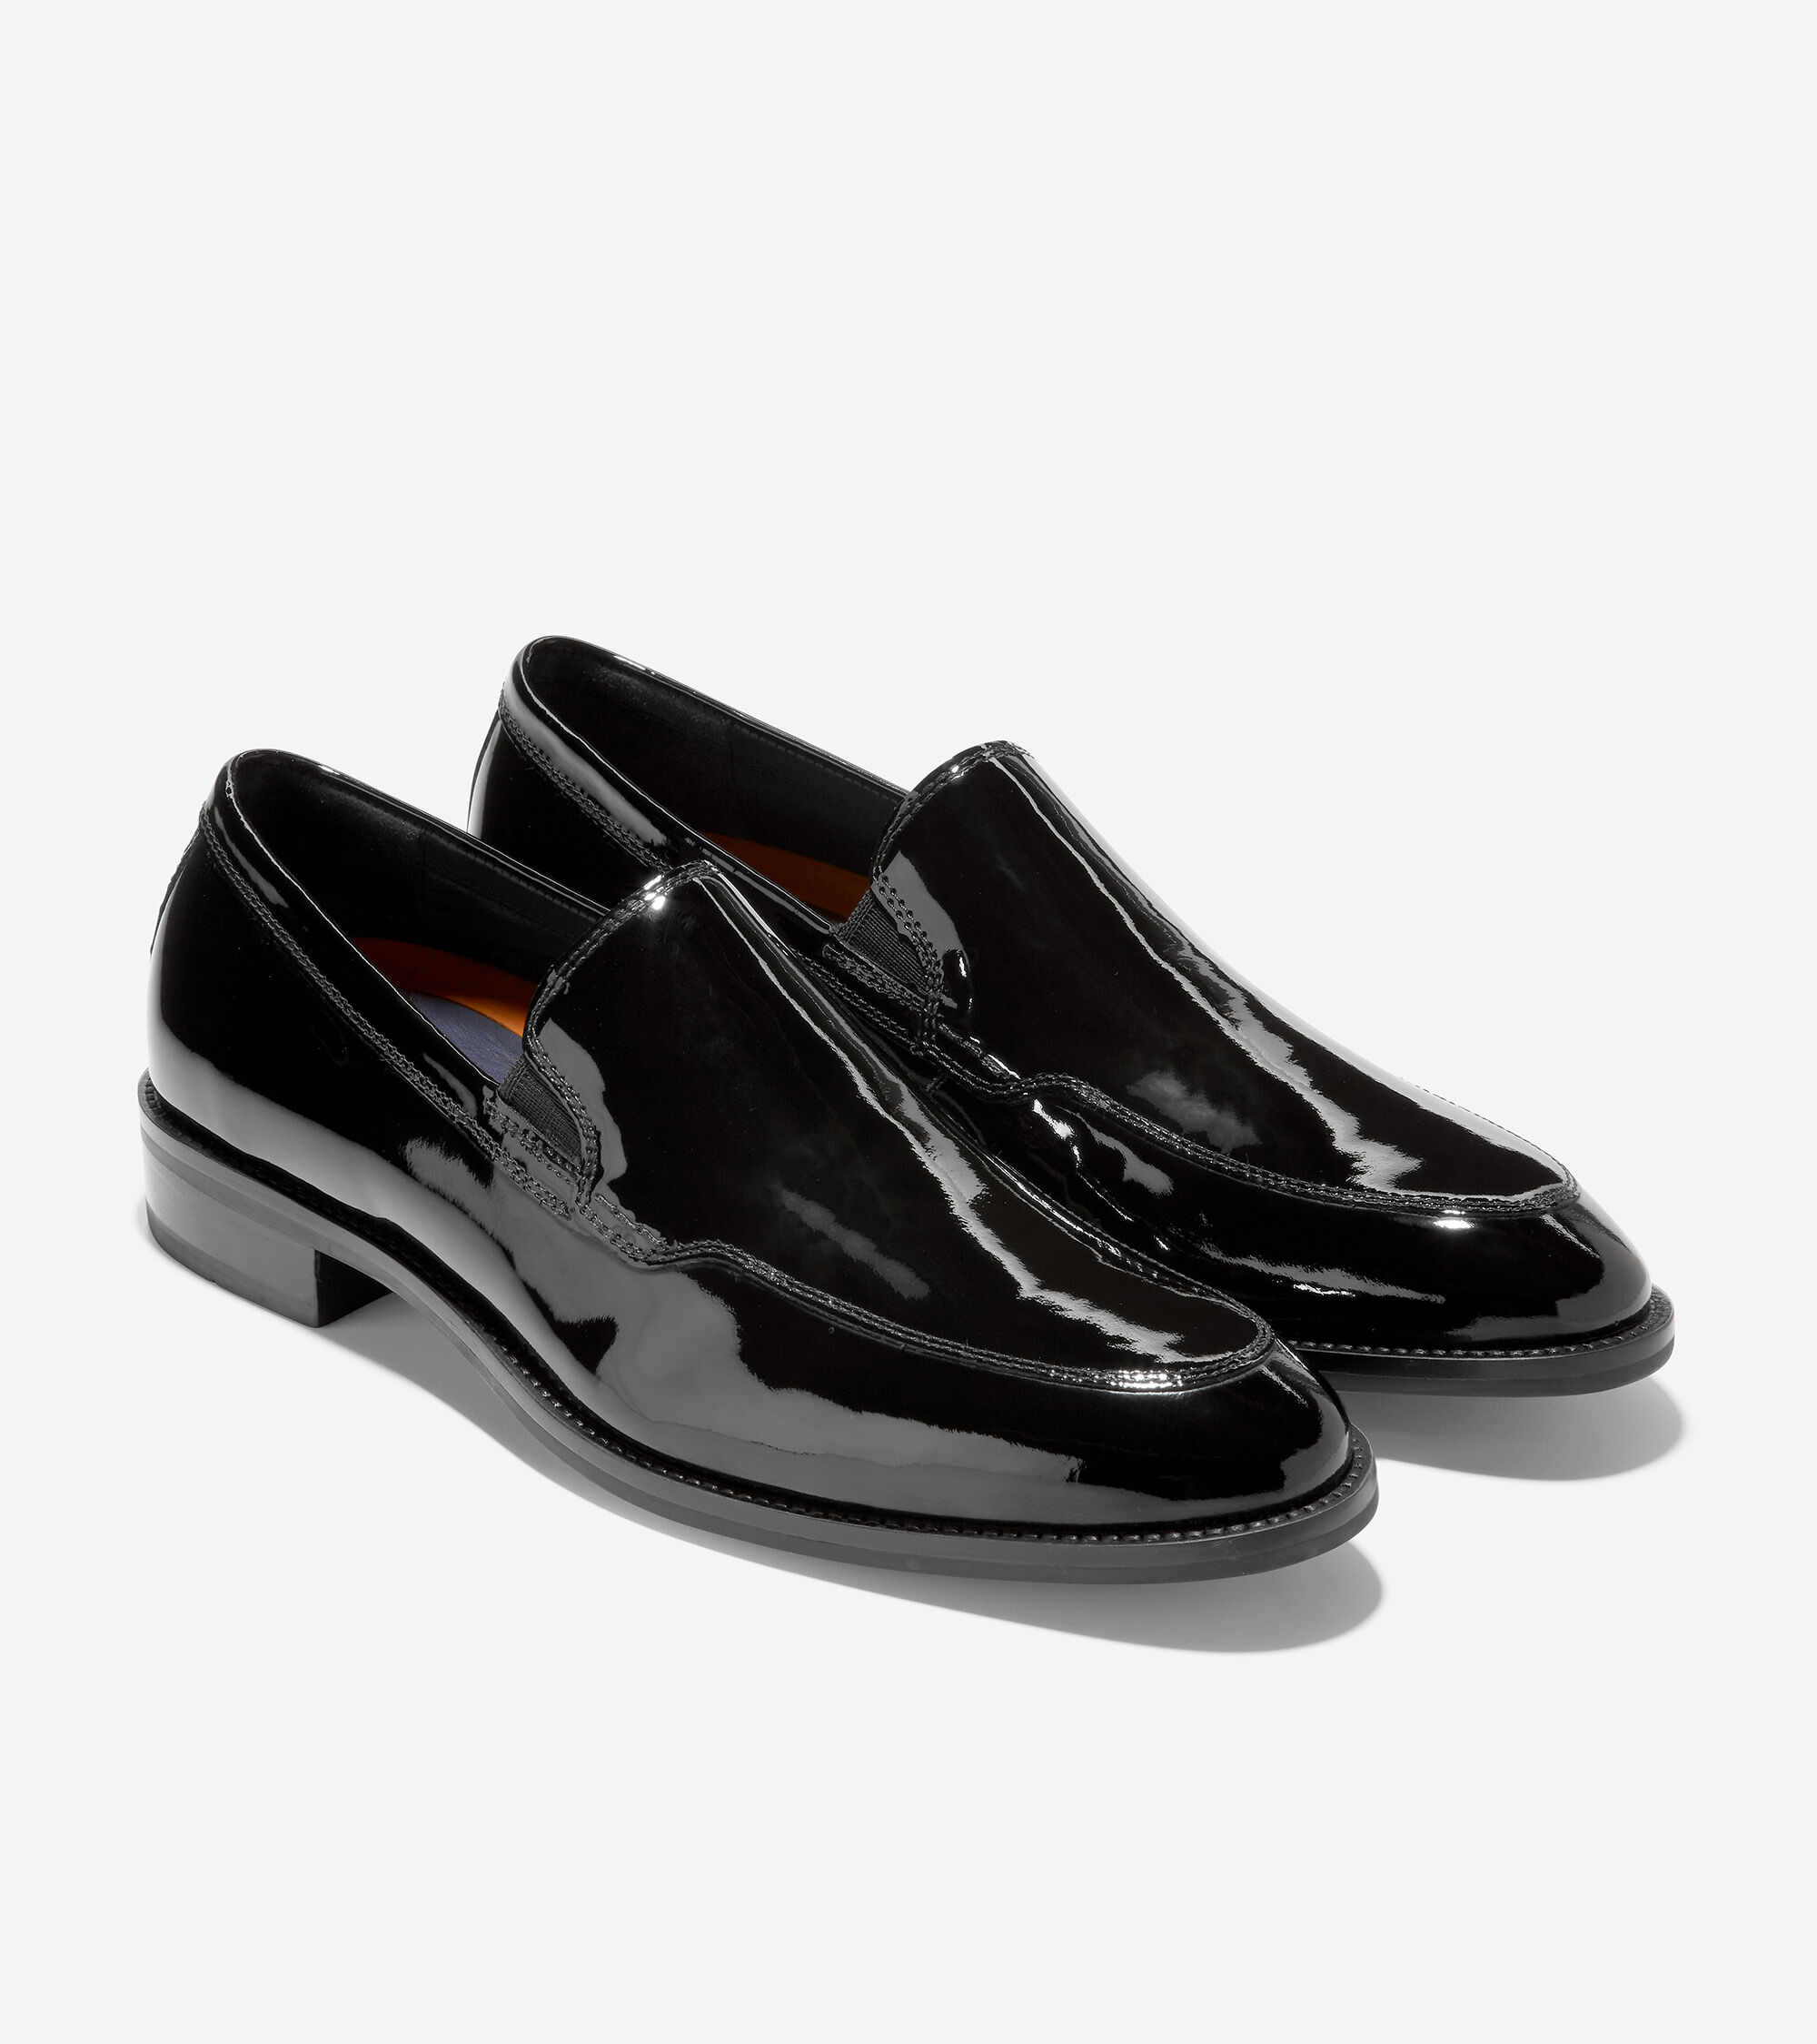 Details about   Cole Haan Men's Hill Lenox Venetian Slip-On Loafer Choose SZ/color 